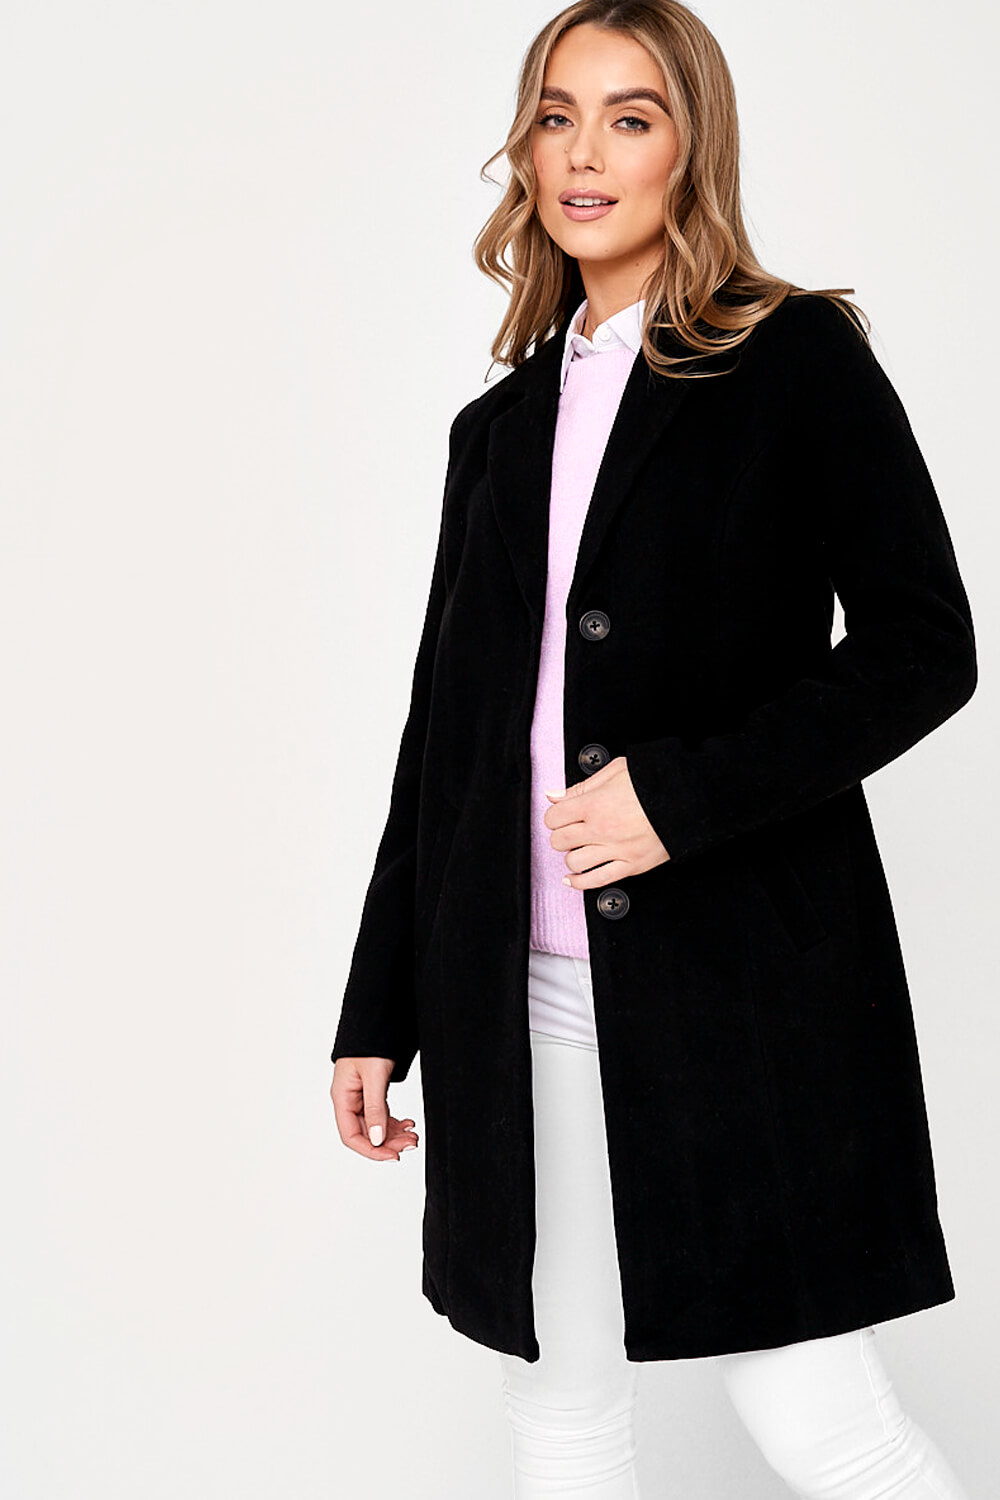 Vero Moda Calacindy Tailored Coat in Black | iCLOTHING - iCLOTHING